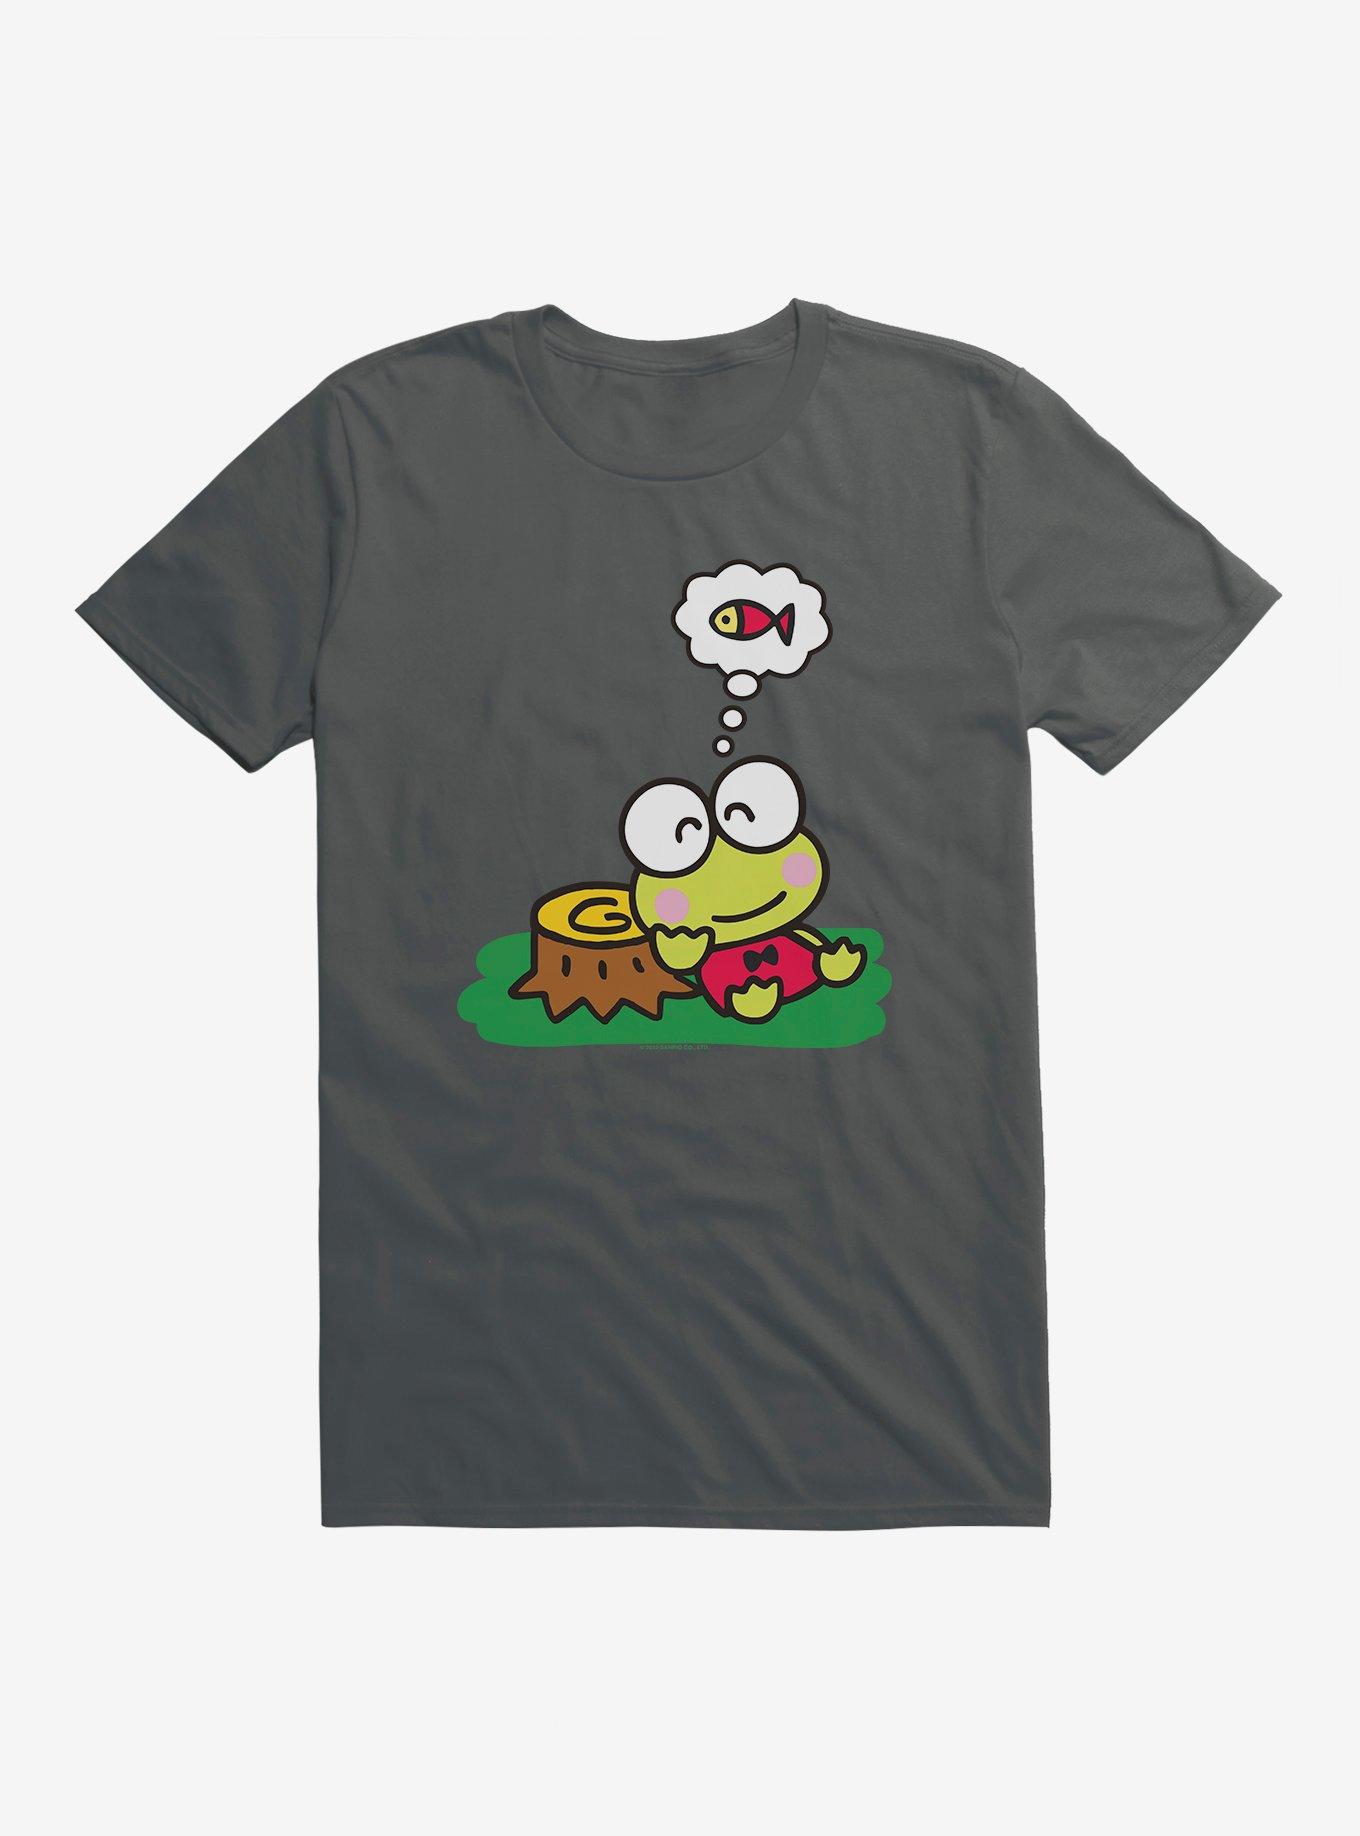 Keroppi Outdoor Thinking T-Shirt